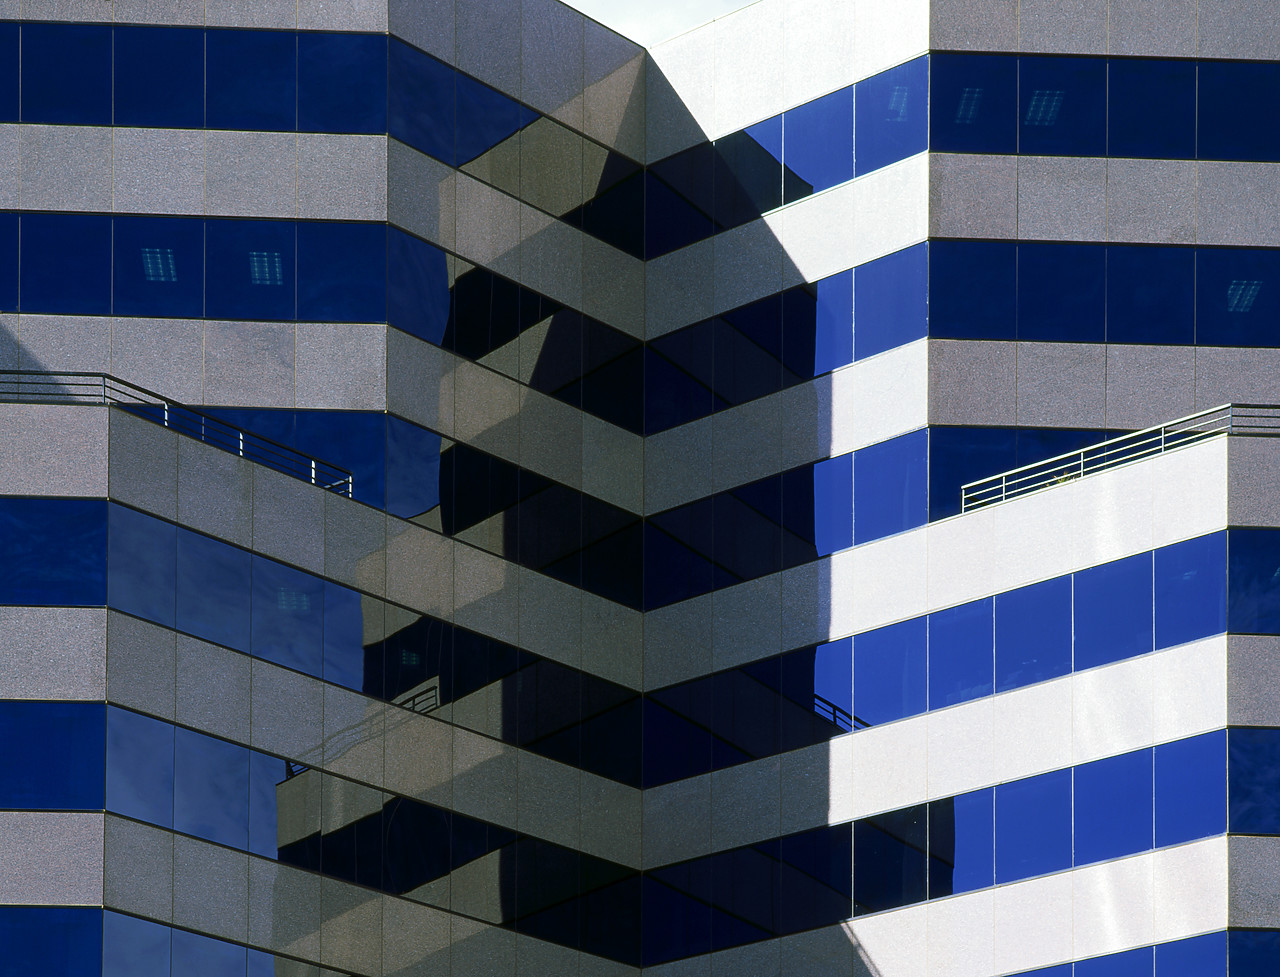 #200072-1 - Mirrored Building Design, Phoenix, Arizona, USA